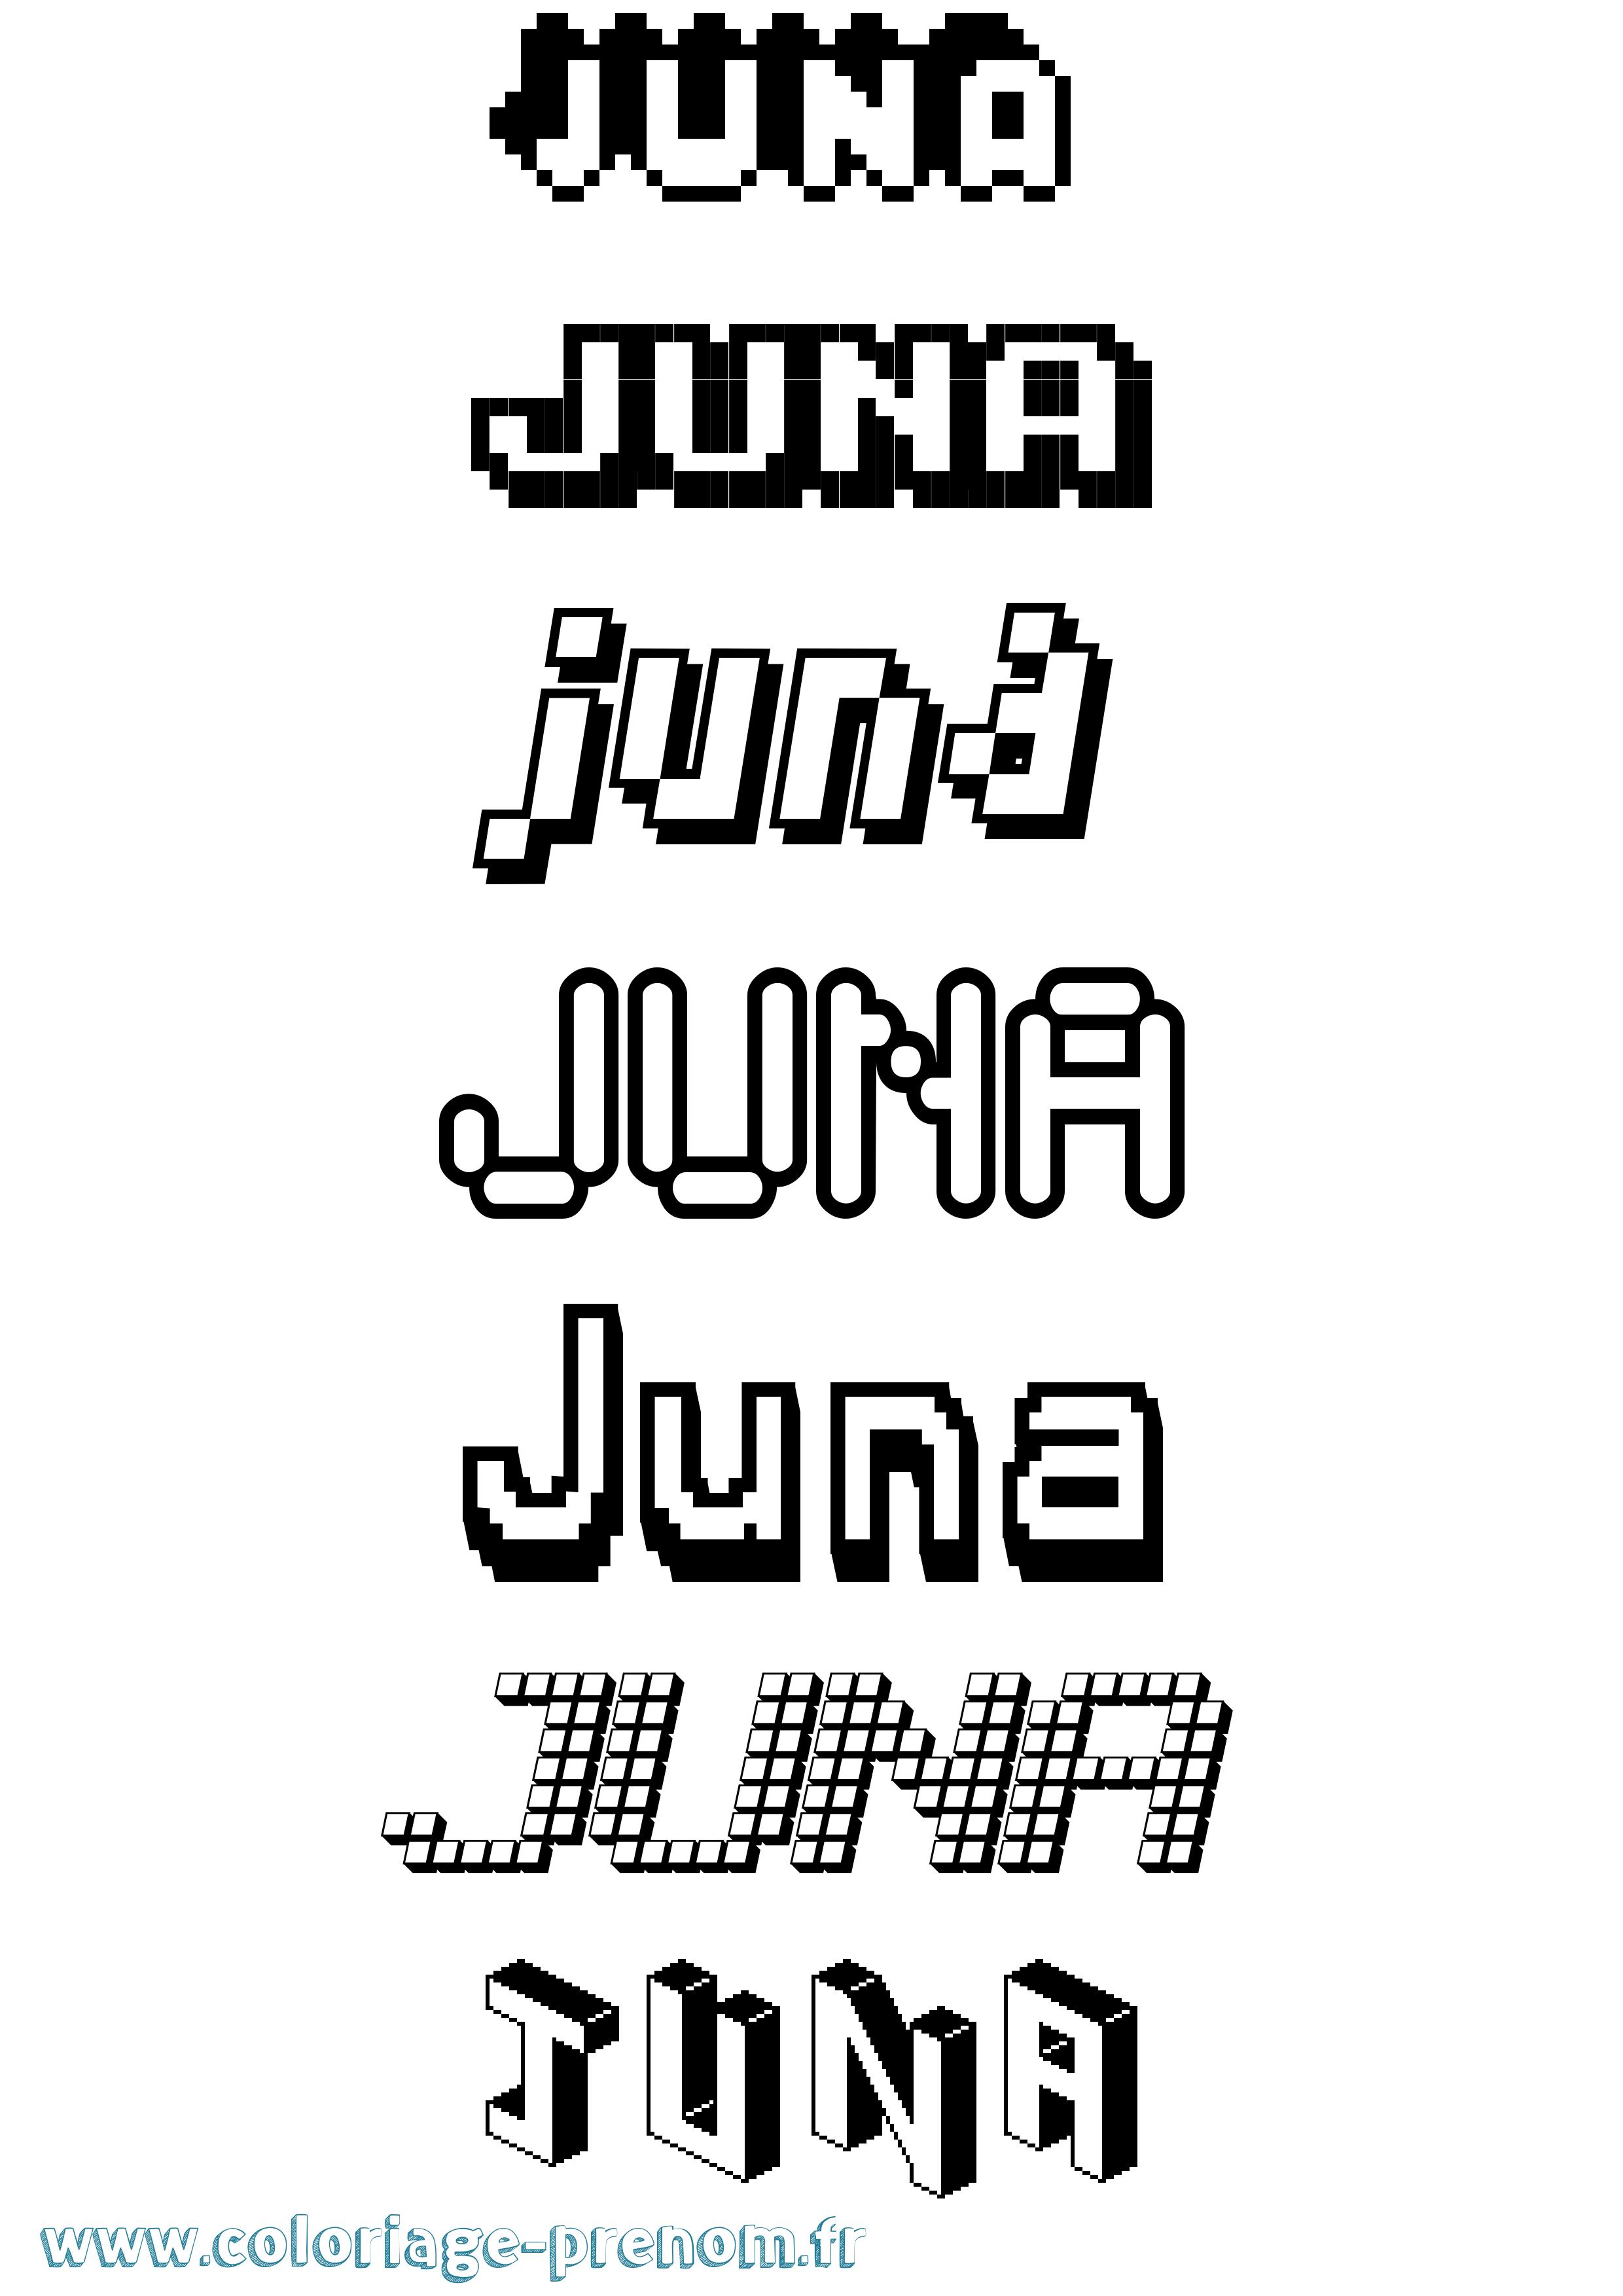 Coloriage prénom Juna Pixel